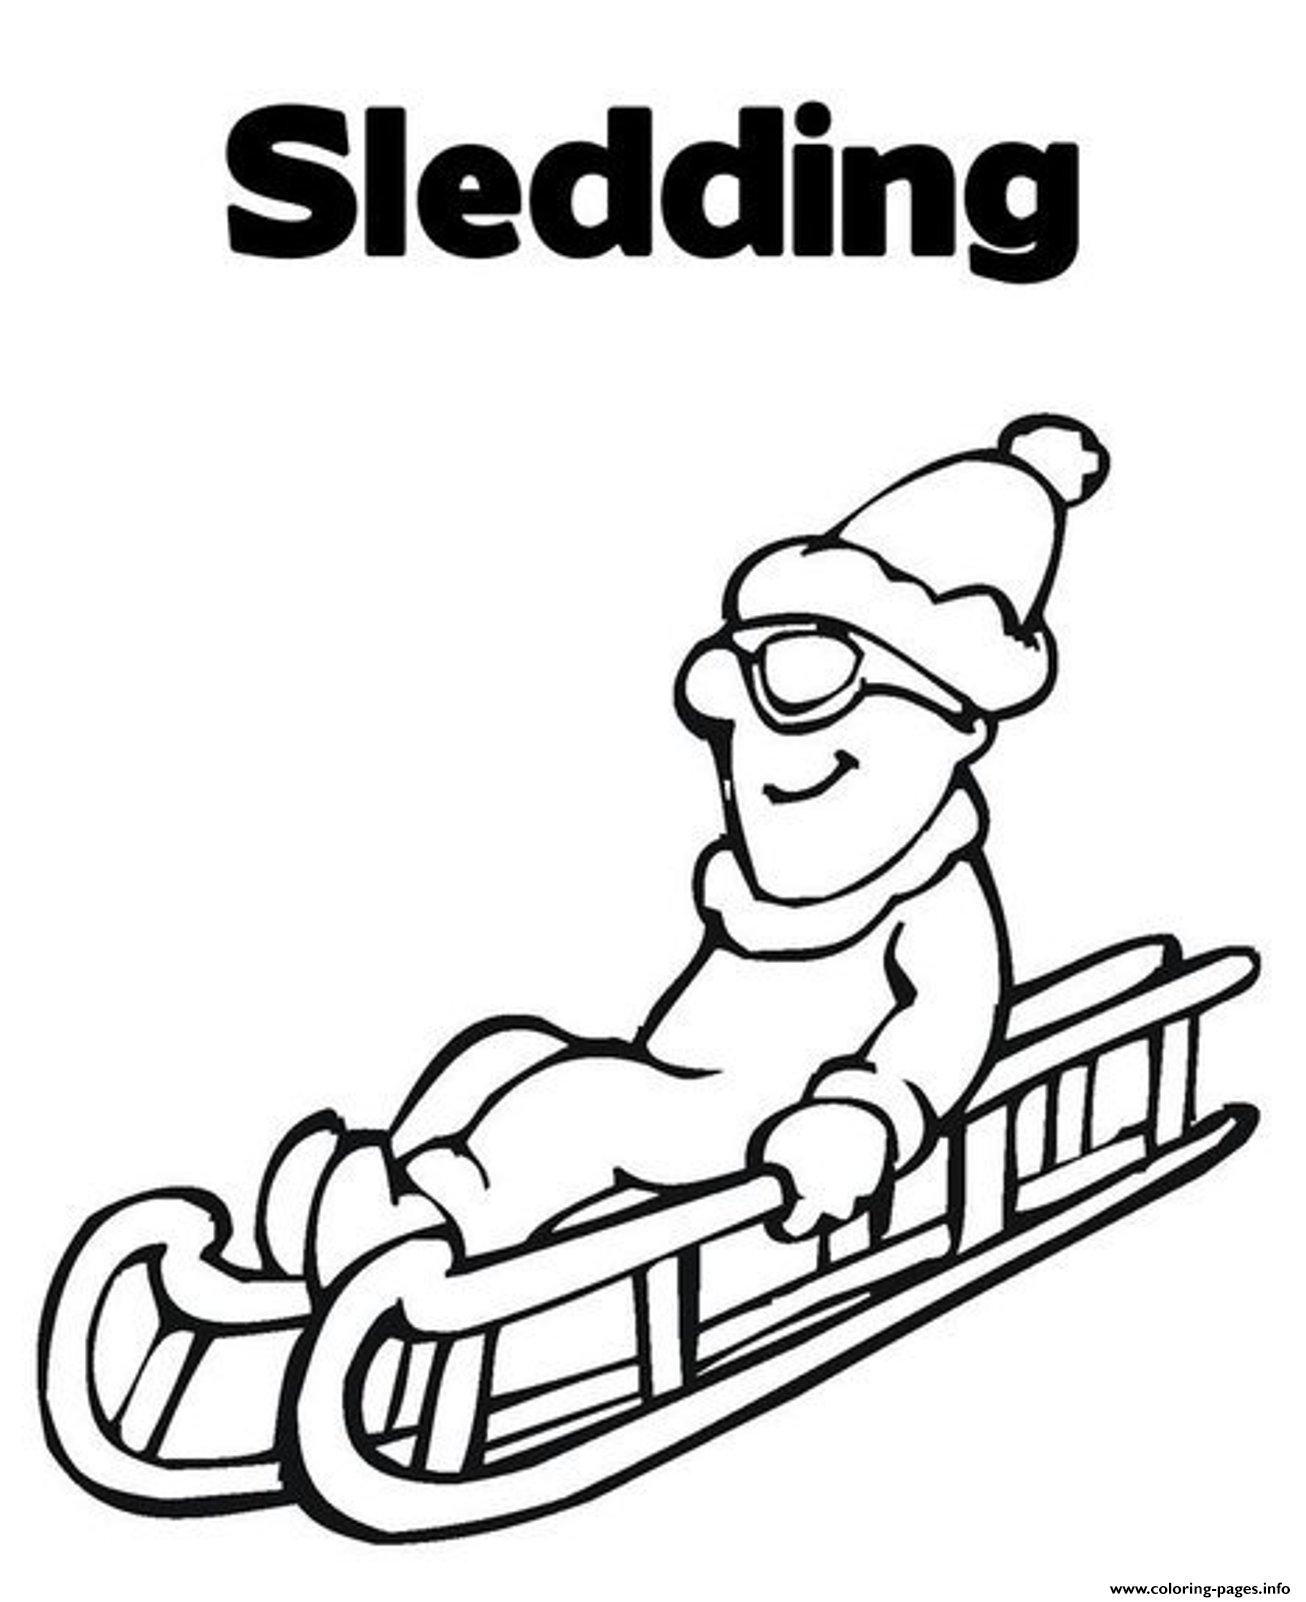 Winter Sledding Fun750f coloring